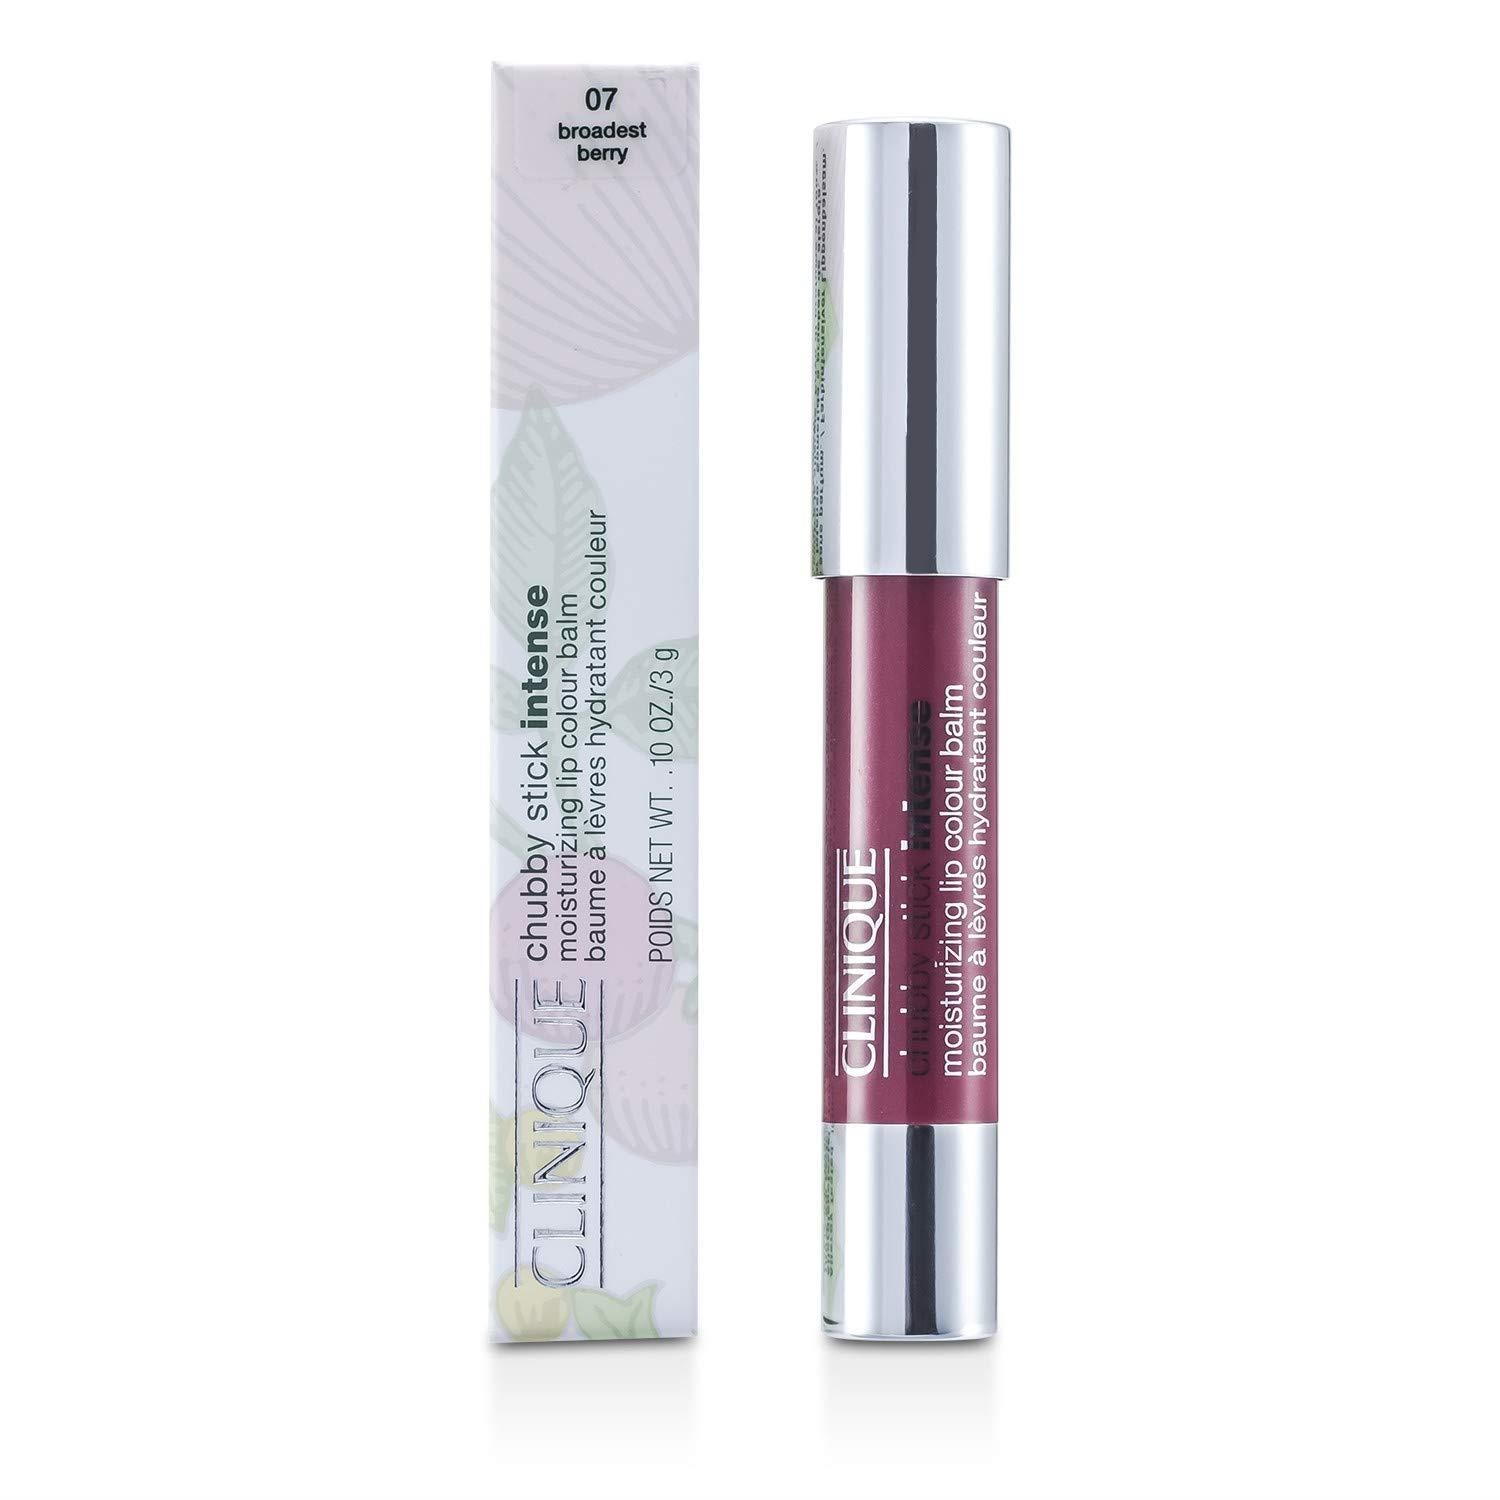 Clinique Chubby Stick Intense Moisturizing Lip Colour Balm - # 07 Broadest Berry Lipstick